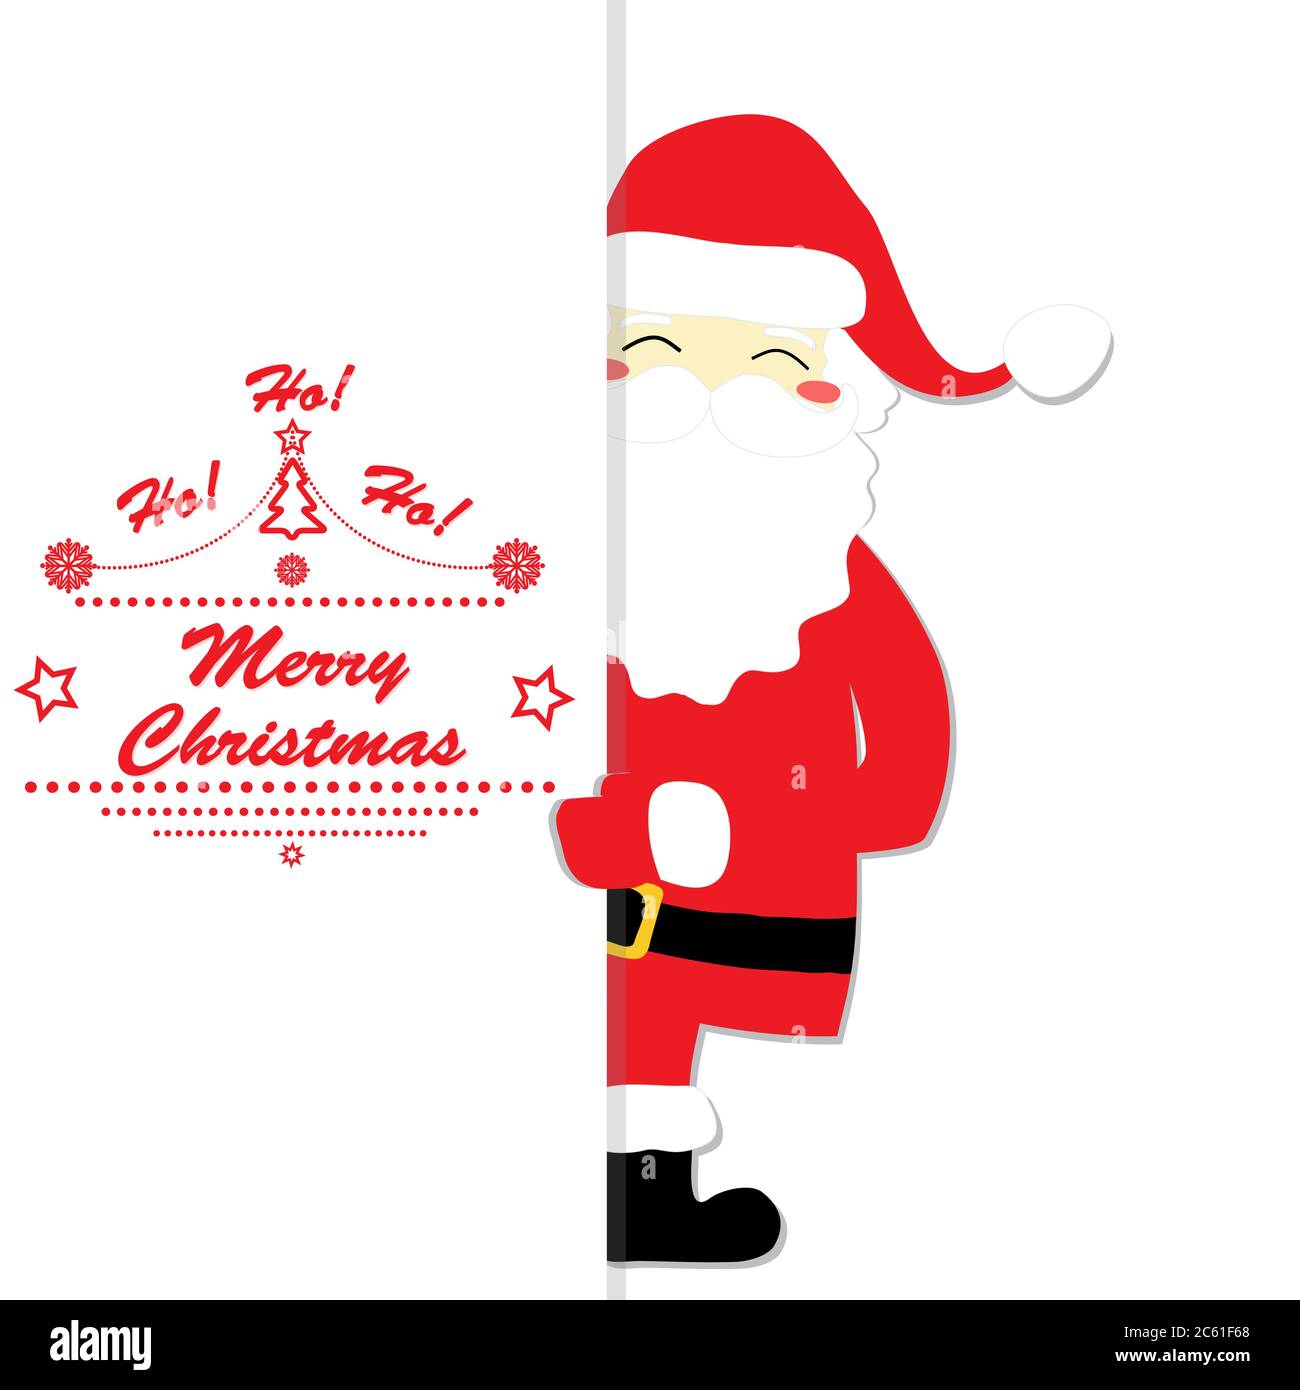 Christmas card Santa message vector illustration layout Stock Vector